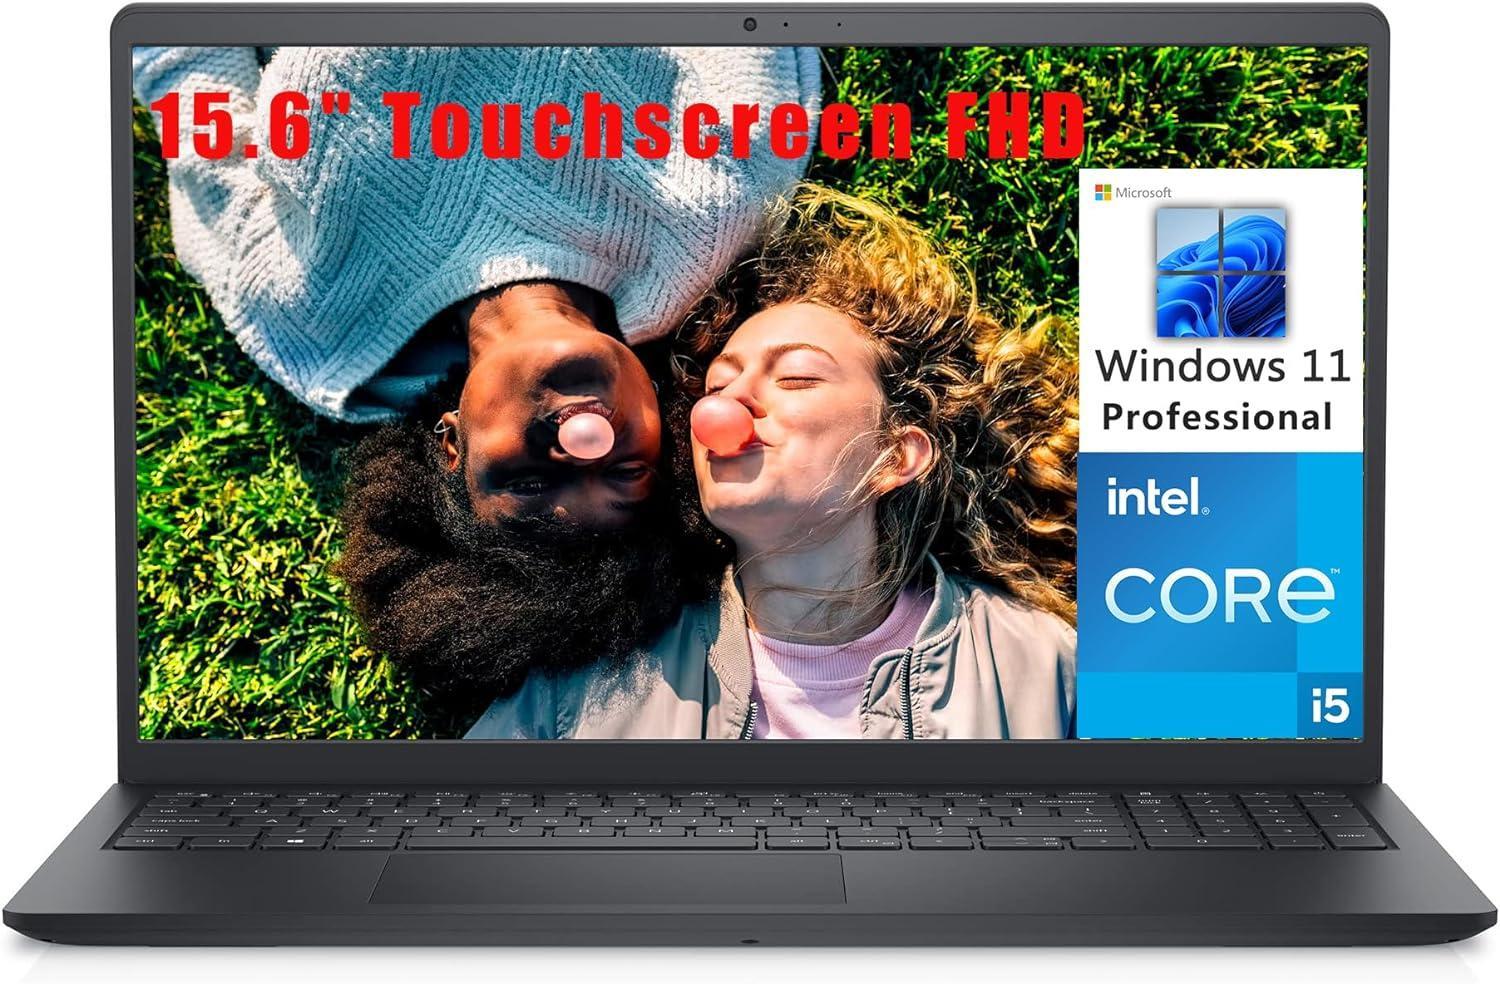 Dell Inspiron 15 3520 3000 15.6" Touchscreen FHD Business Laptop Computer, Intel Quad-Core i5-1135G7 (Beat i7-1065G7), 8GB DDR4 RAM, 512GB PCIe SSD, 802.11AC WiFi, Bluetooth, Windows 11 Pro